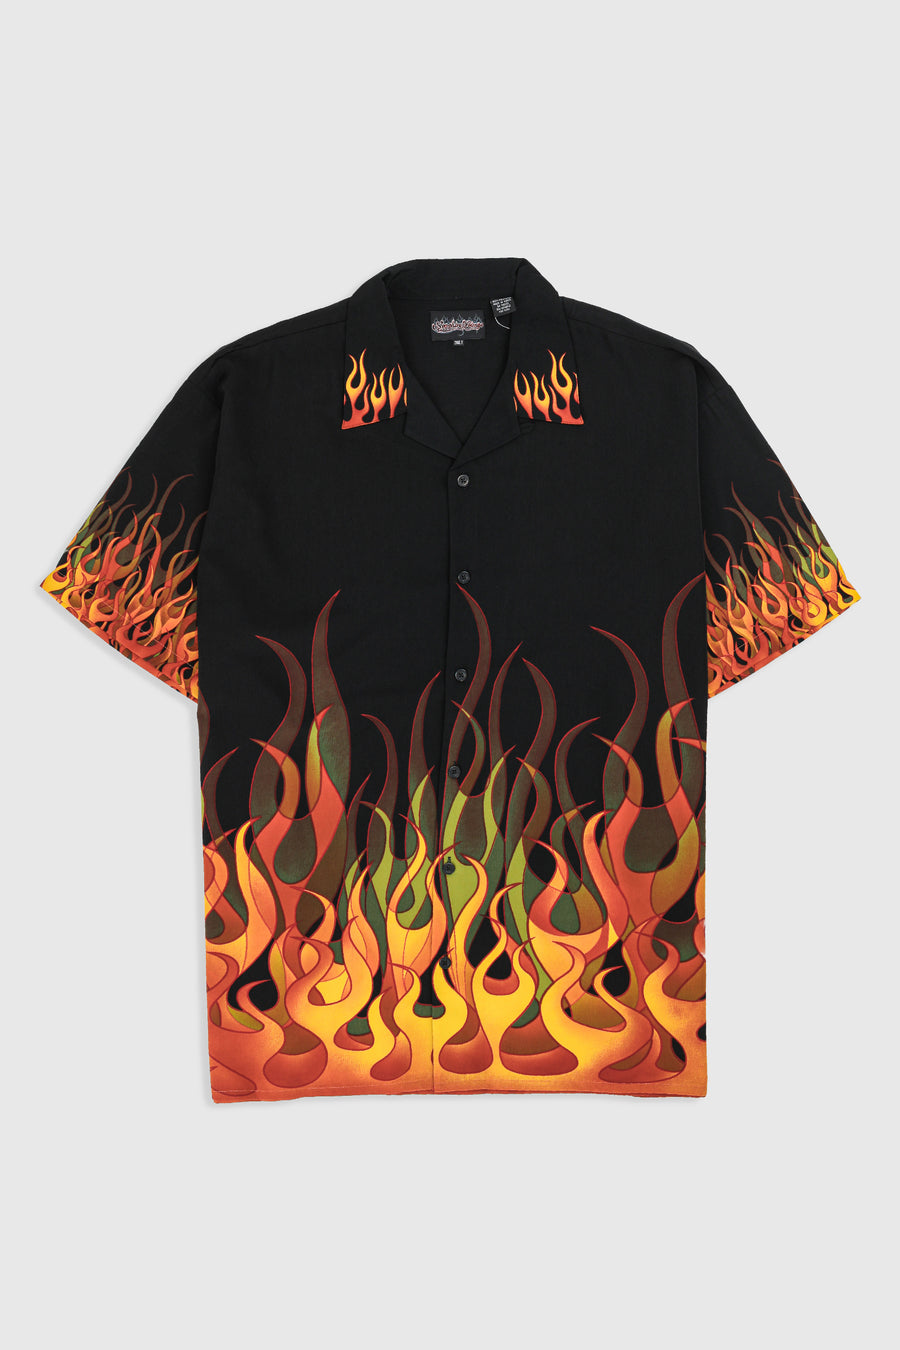 Deadstock Dragonfly Flames Camp Shirt - XXL, XXXL, XXXXL